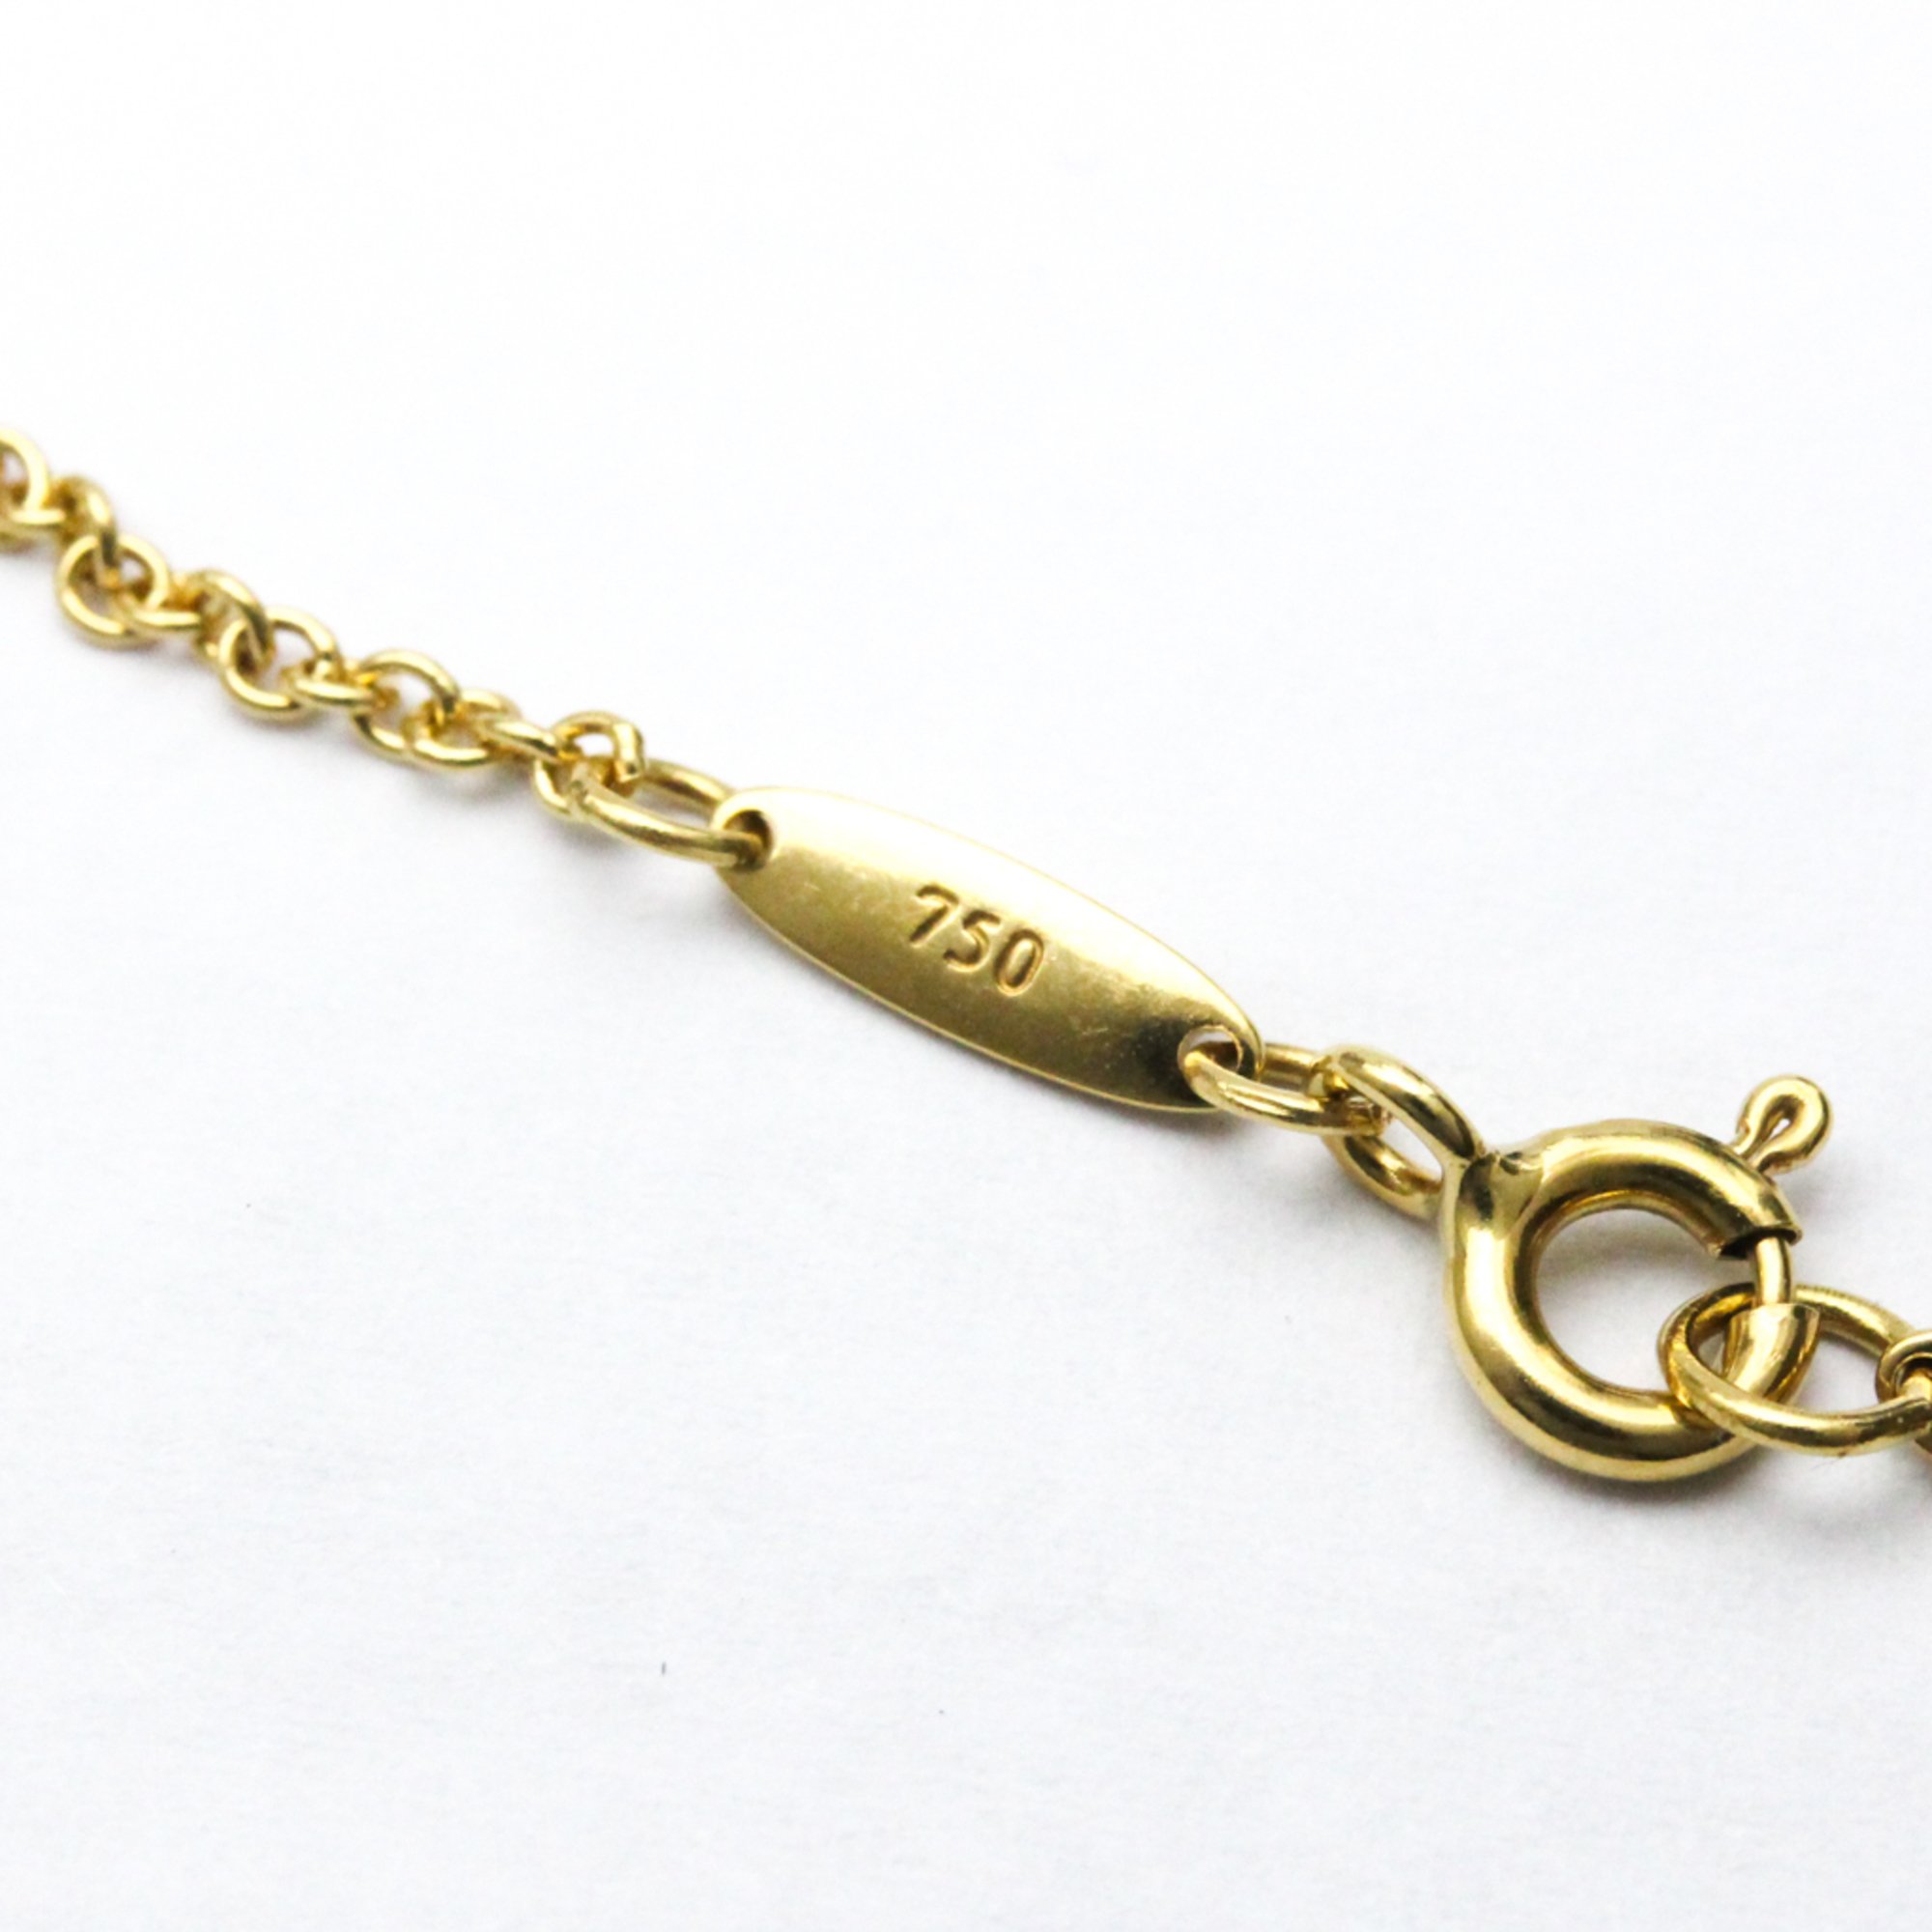 Tiffany Return To Tiffany Round Key Necklace Yellow Gold (18K) No Stone Women's Fashion Pendant Necklace (Gold)